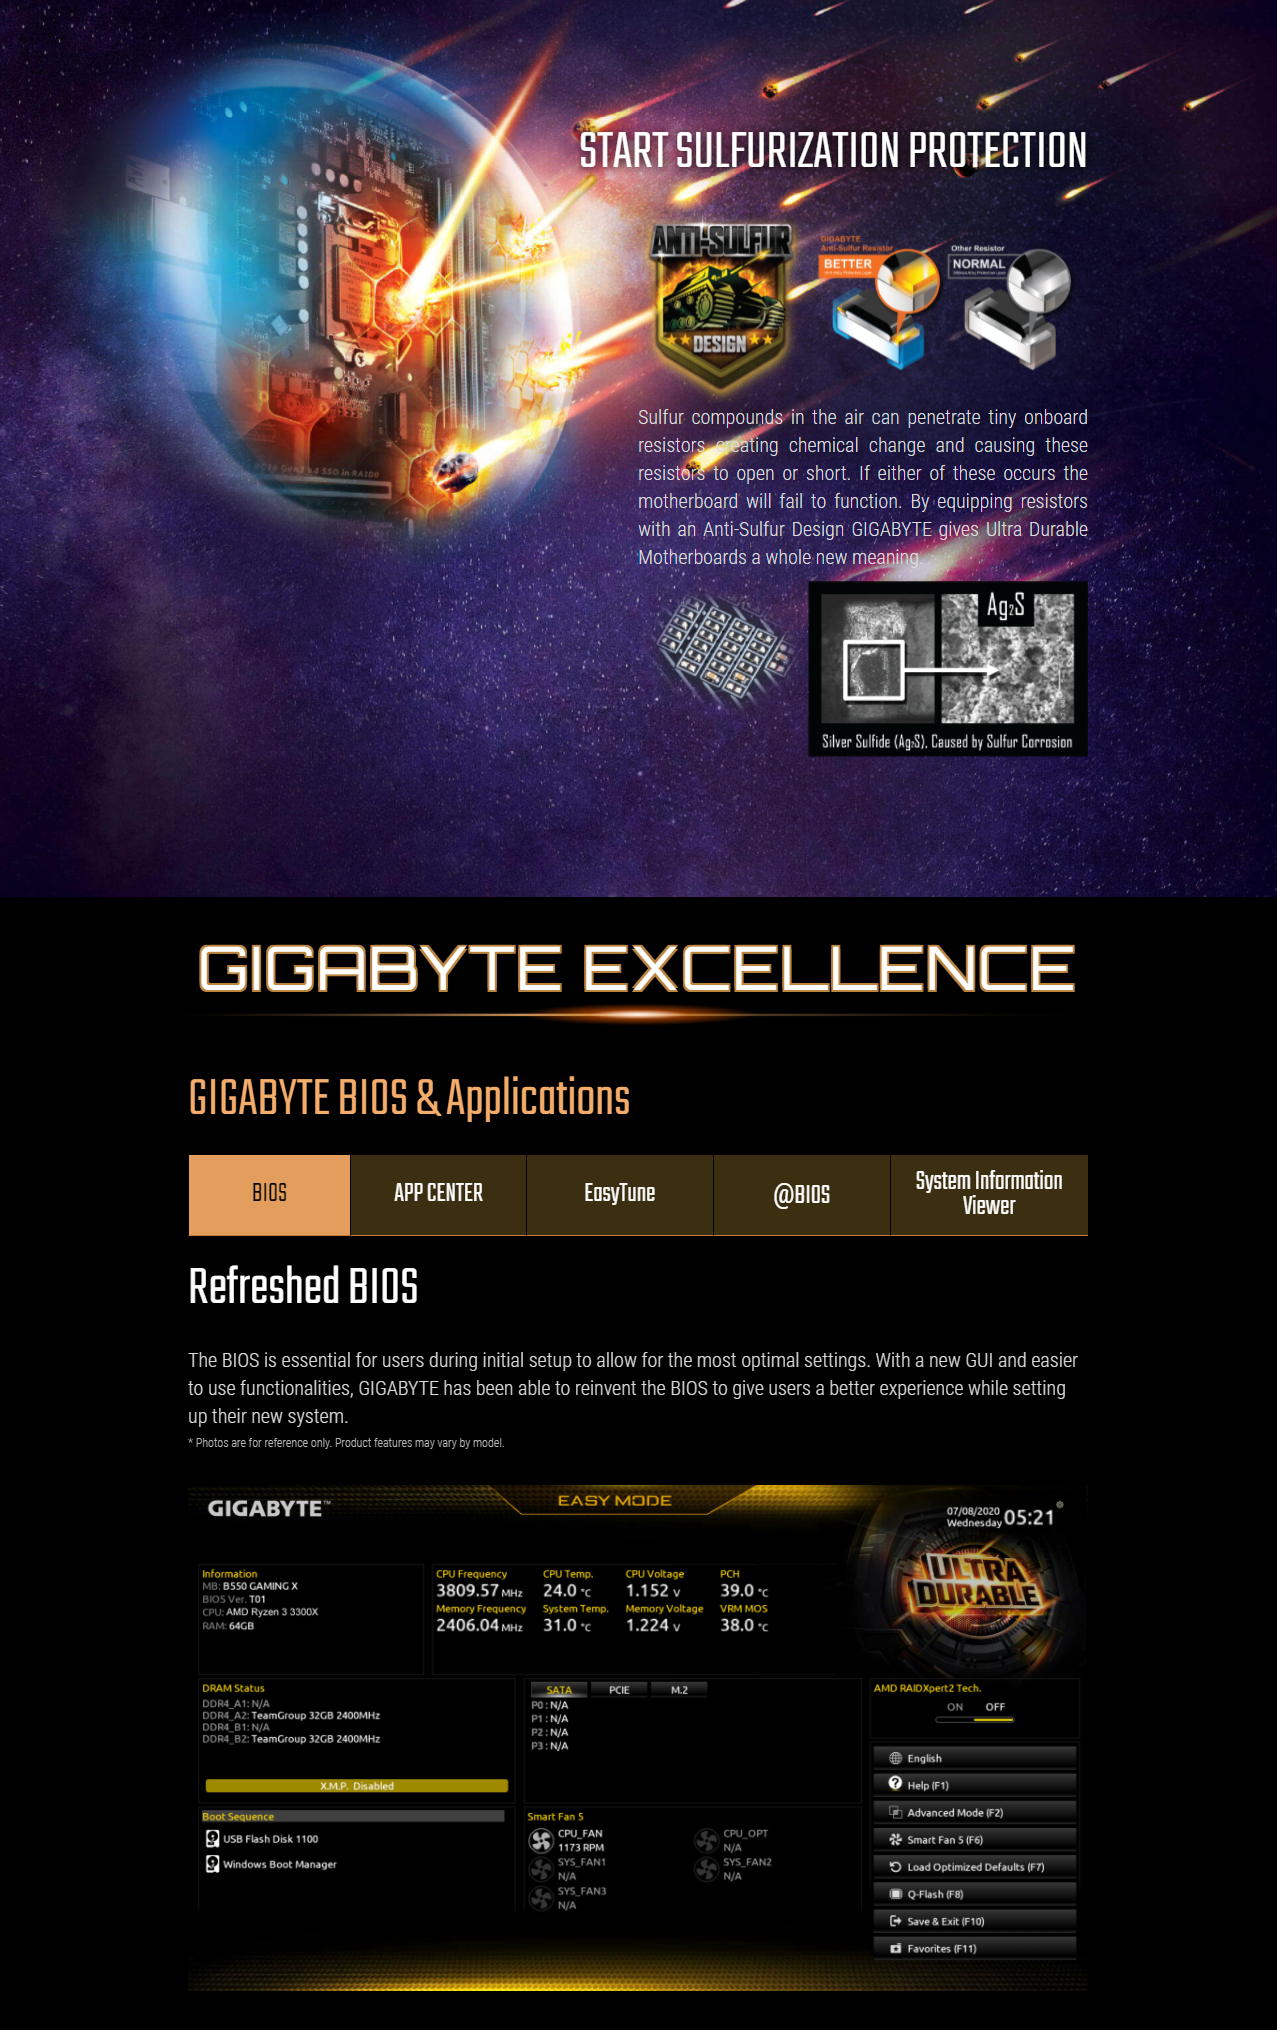 GIGABYTE B550M DS3H AM4 AMD B550 Micro-ATX Motherboard with Dual M.2, SATA  6Gb/s, USB 3.2 Gen 1, PCIe 4.0